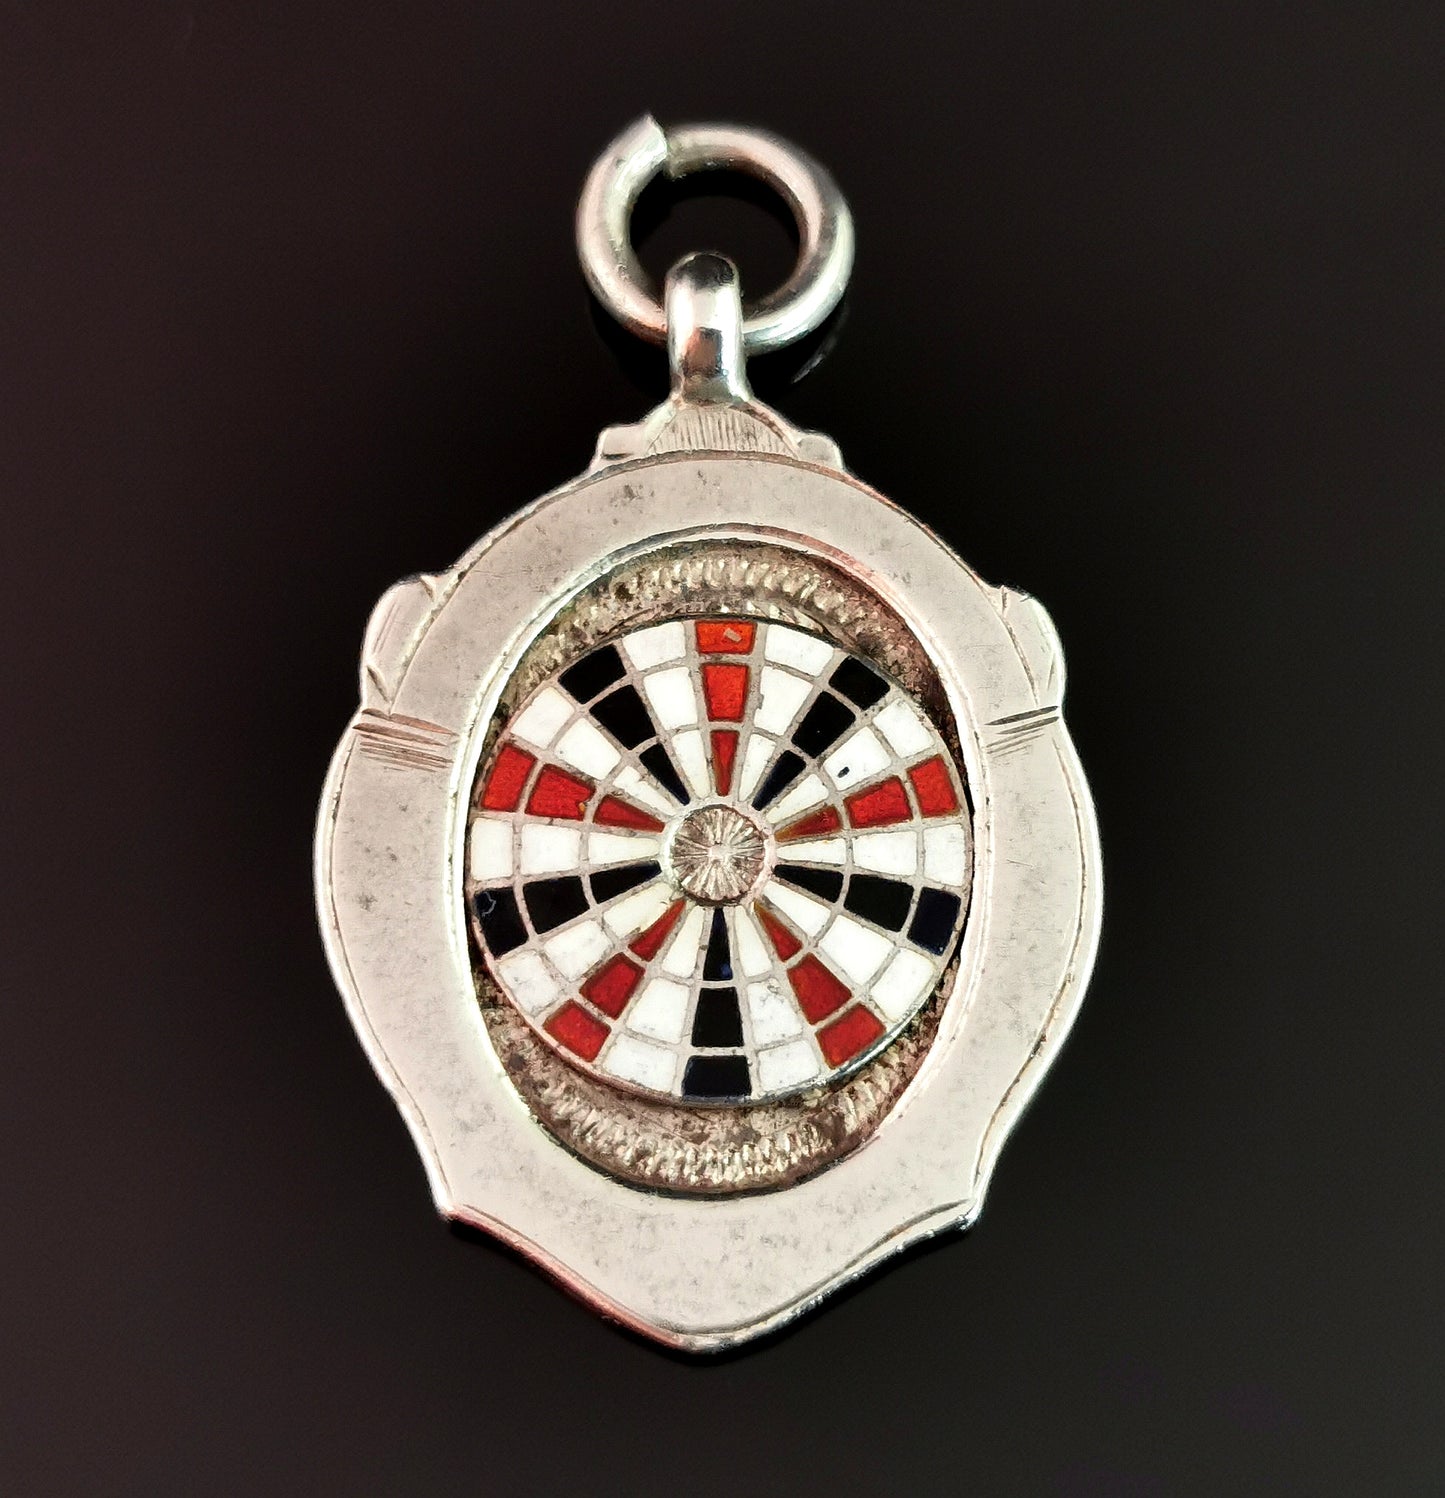 Vintage sterling silver and enamel fob pendant, watch fob, Darts, Dartboard